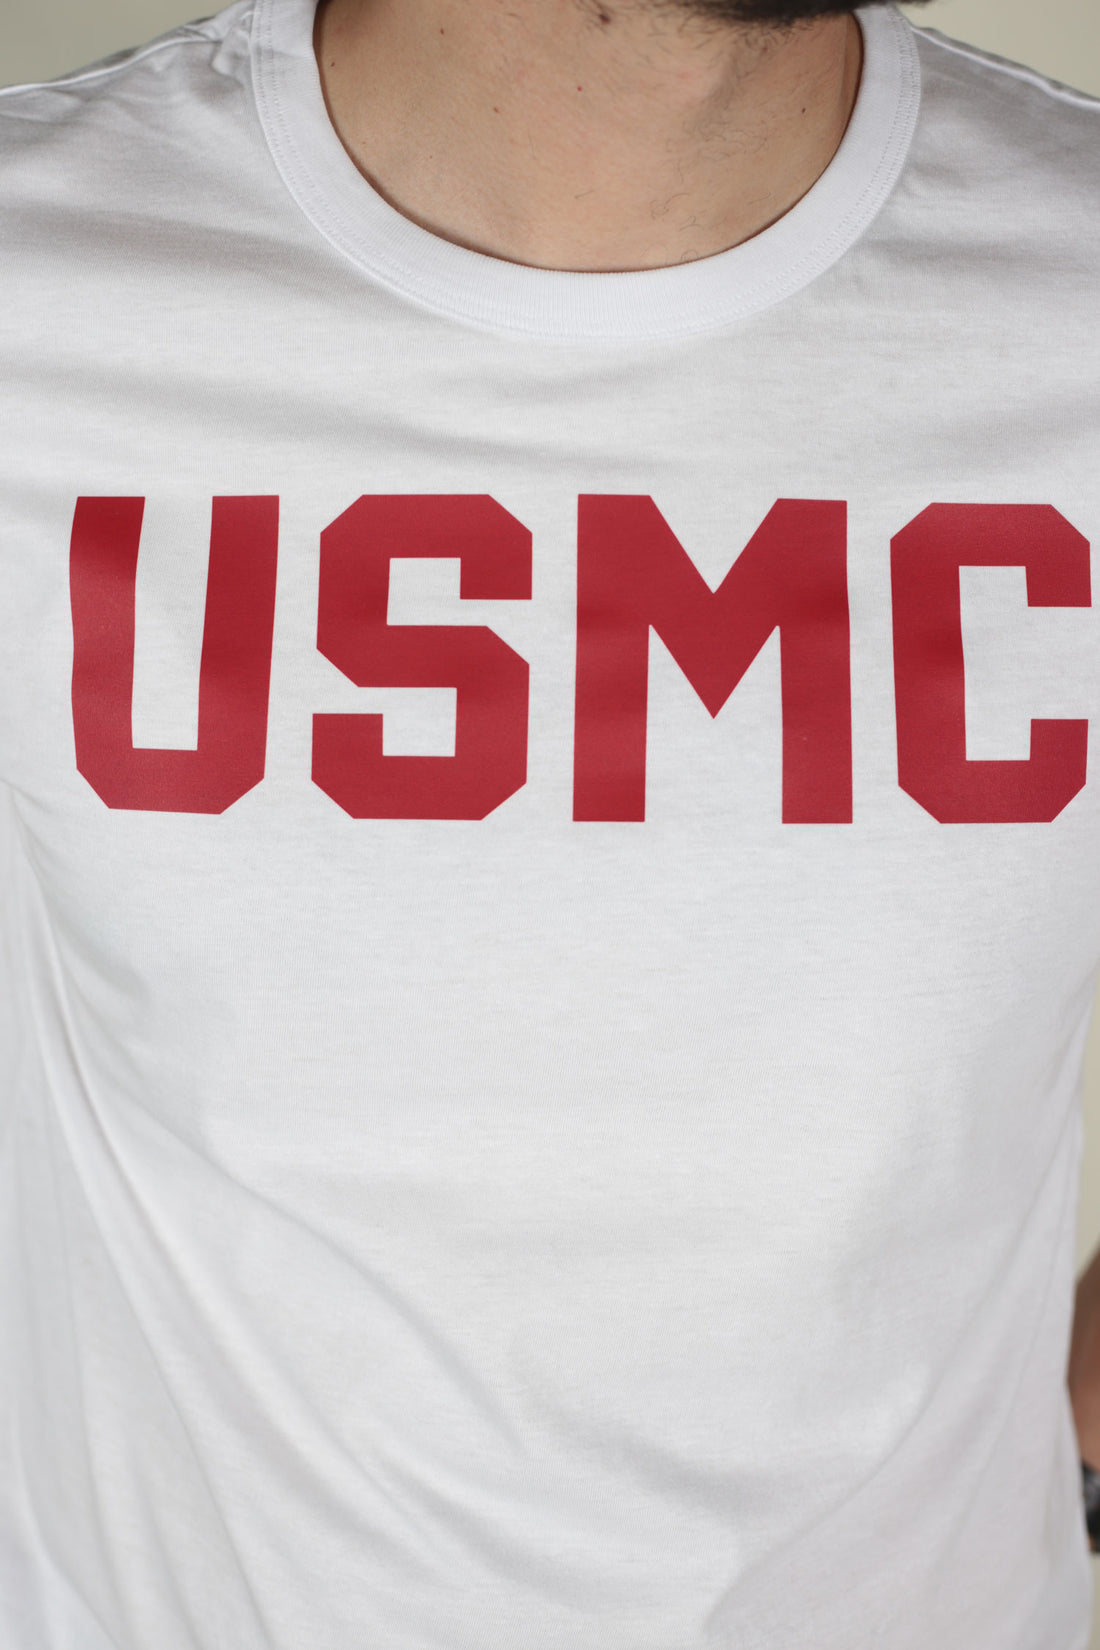 T-shirt USMC